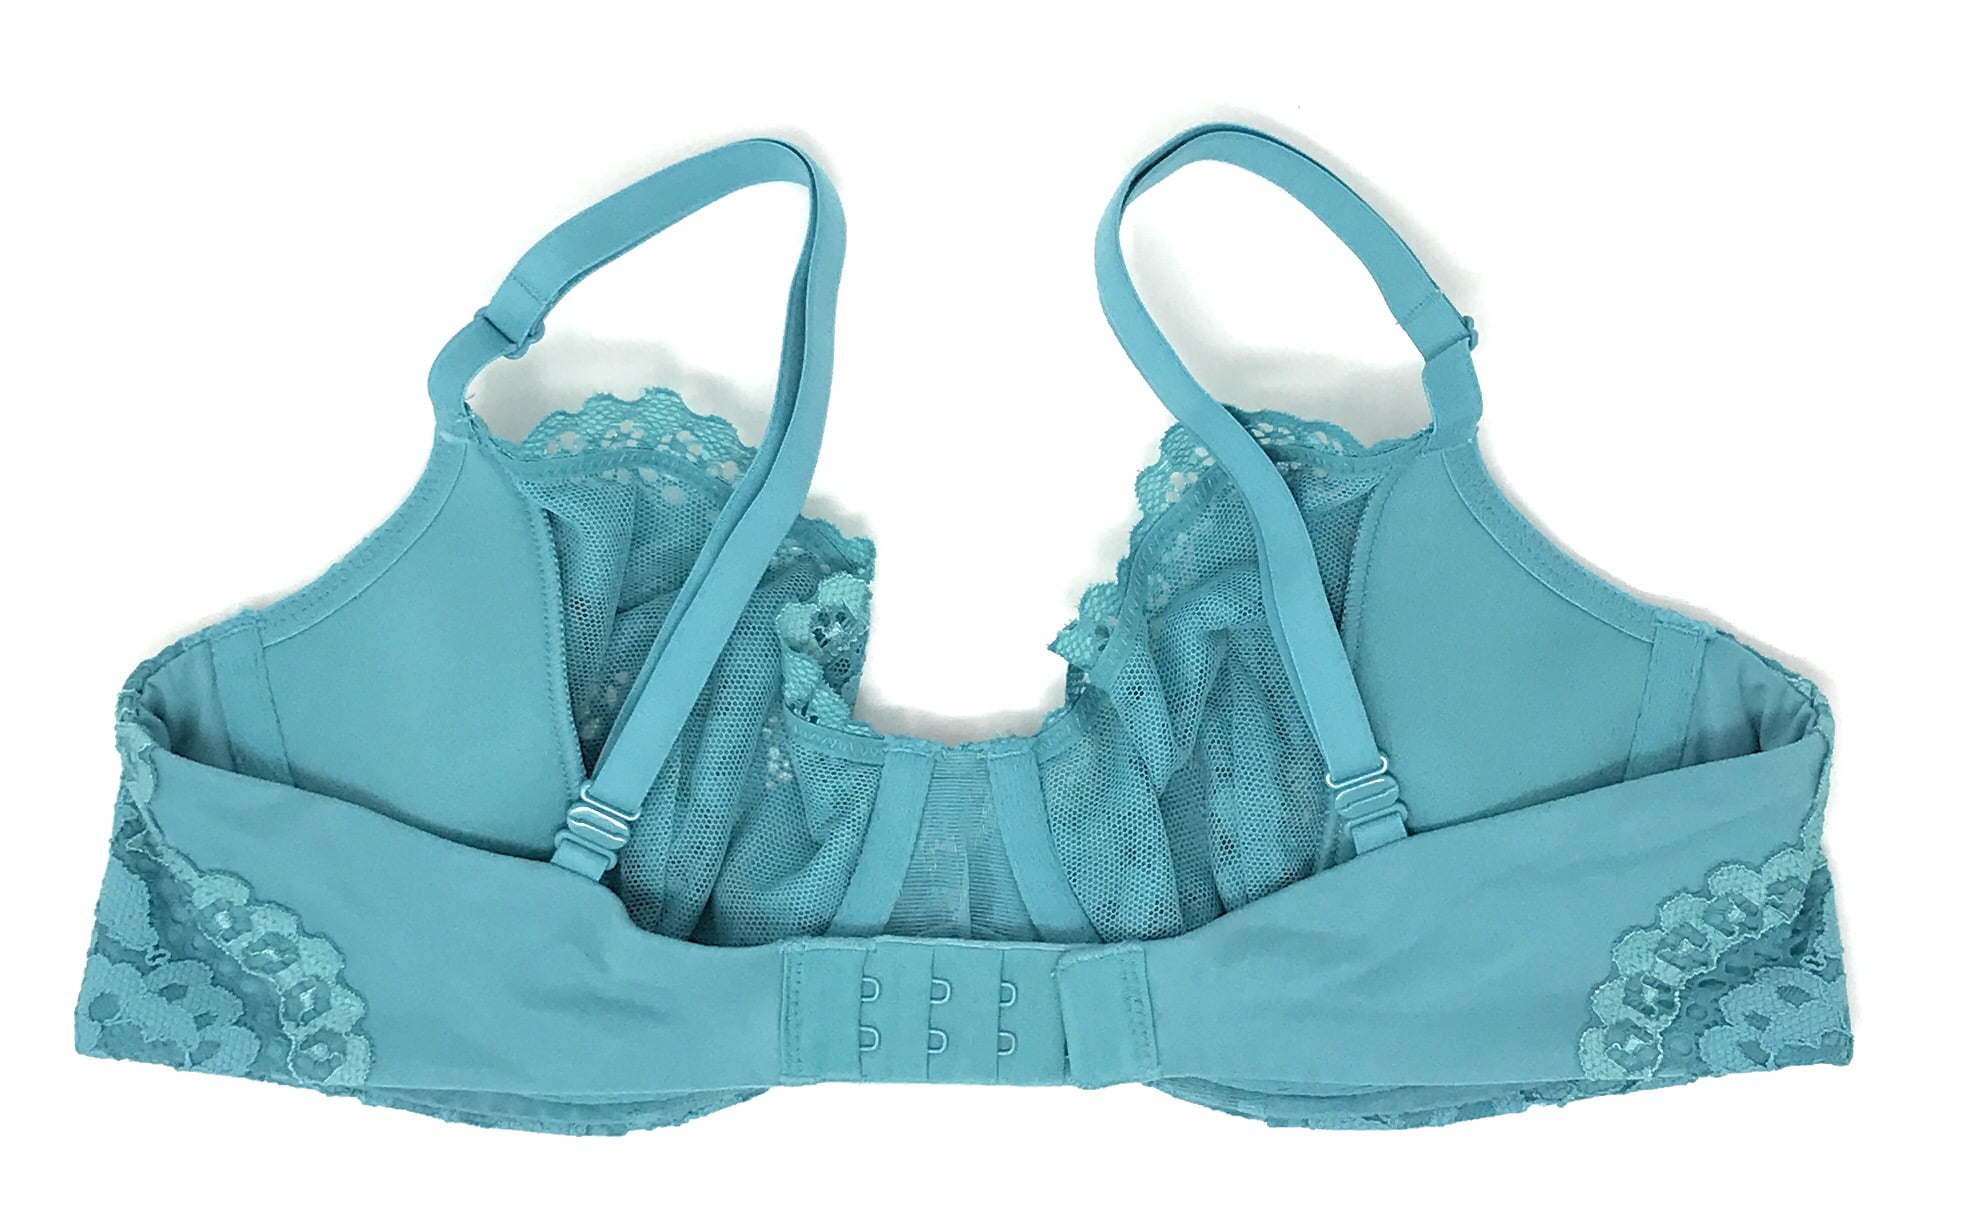 Victoria's Secret Victoria Secret Bra Blue Size 32 B - $17 (69% Off Retail)  - From Maddy